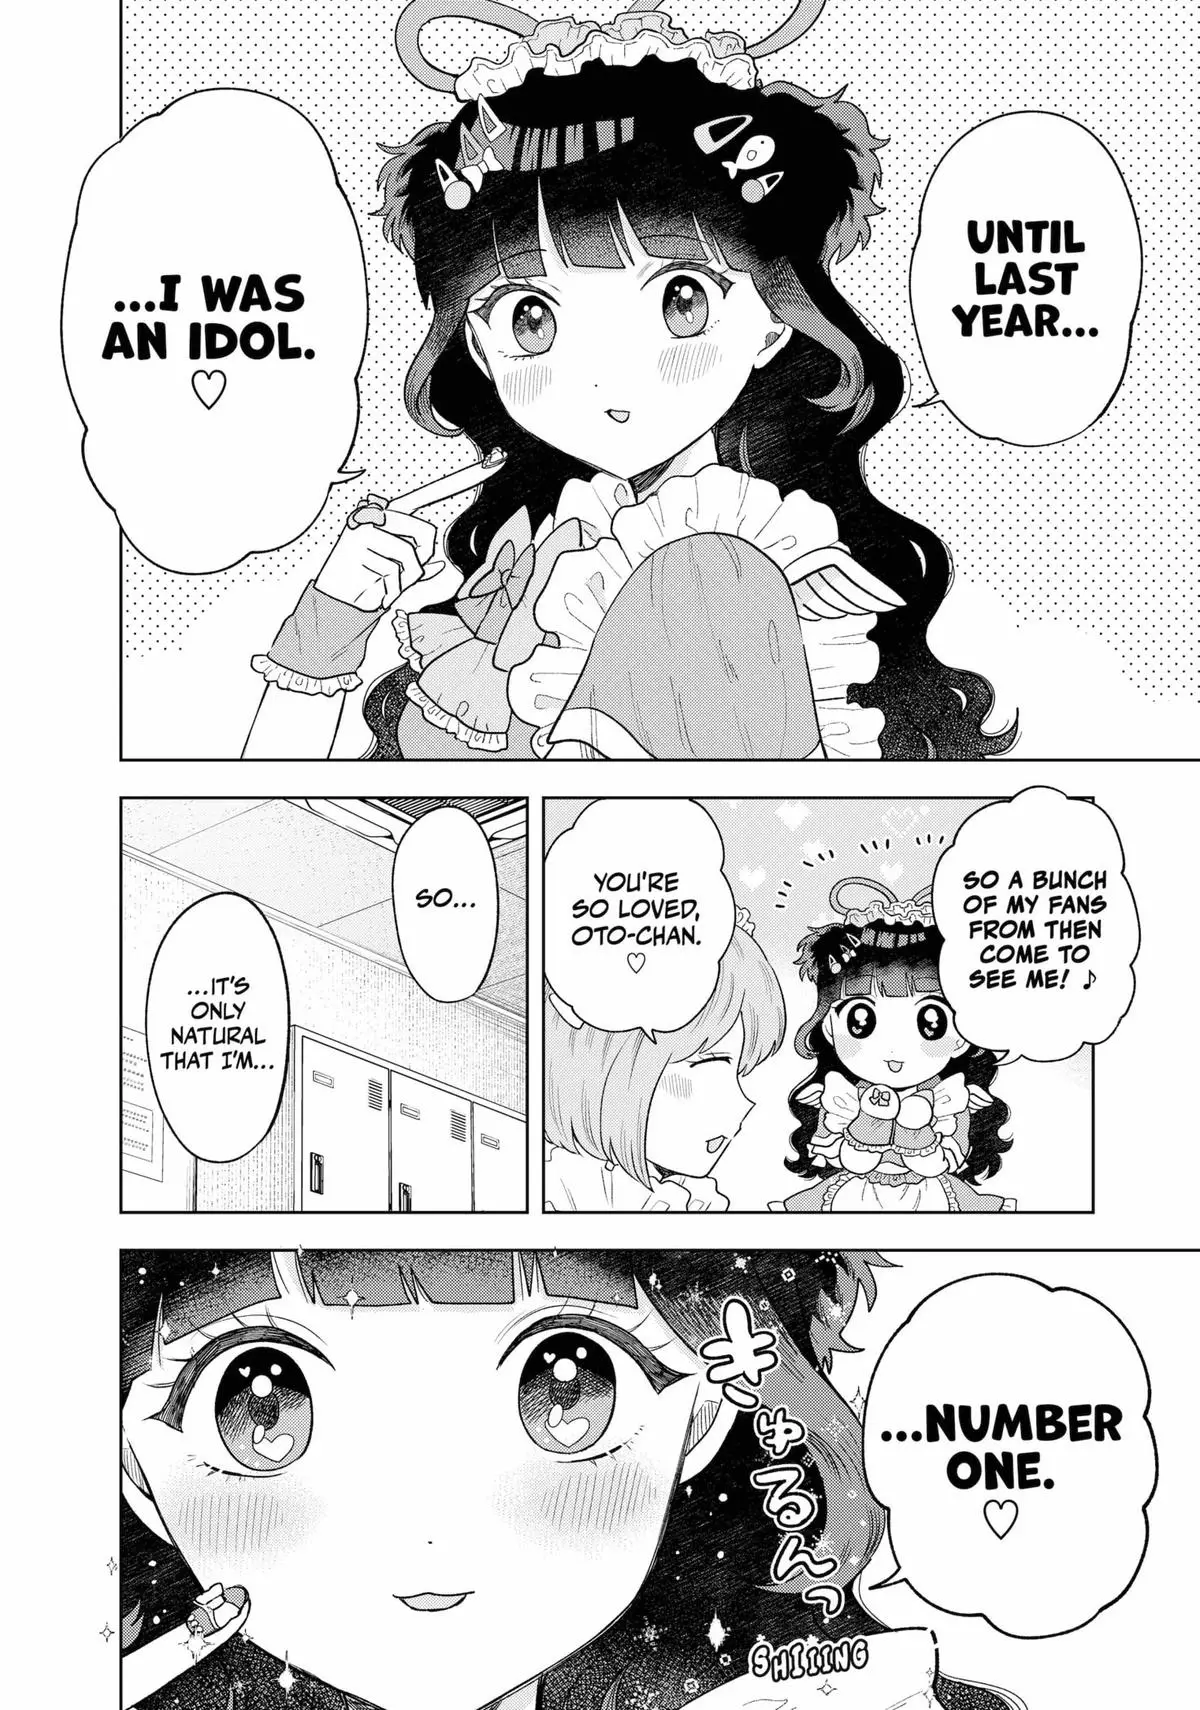 Tsuruko Returns The Favor - 5 page 2-14ee356e